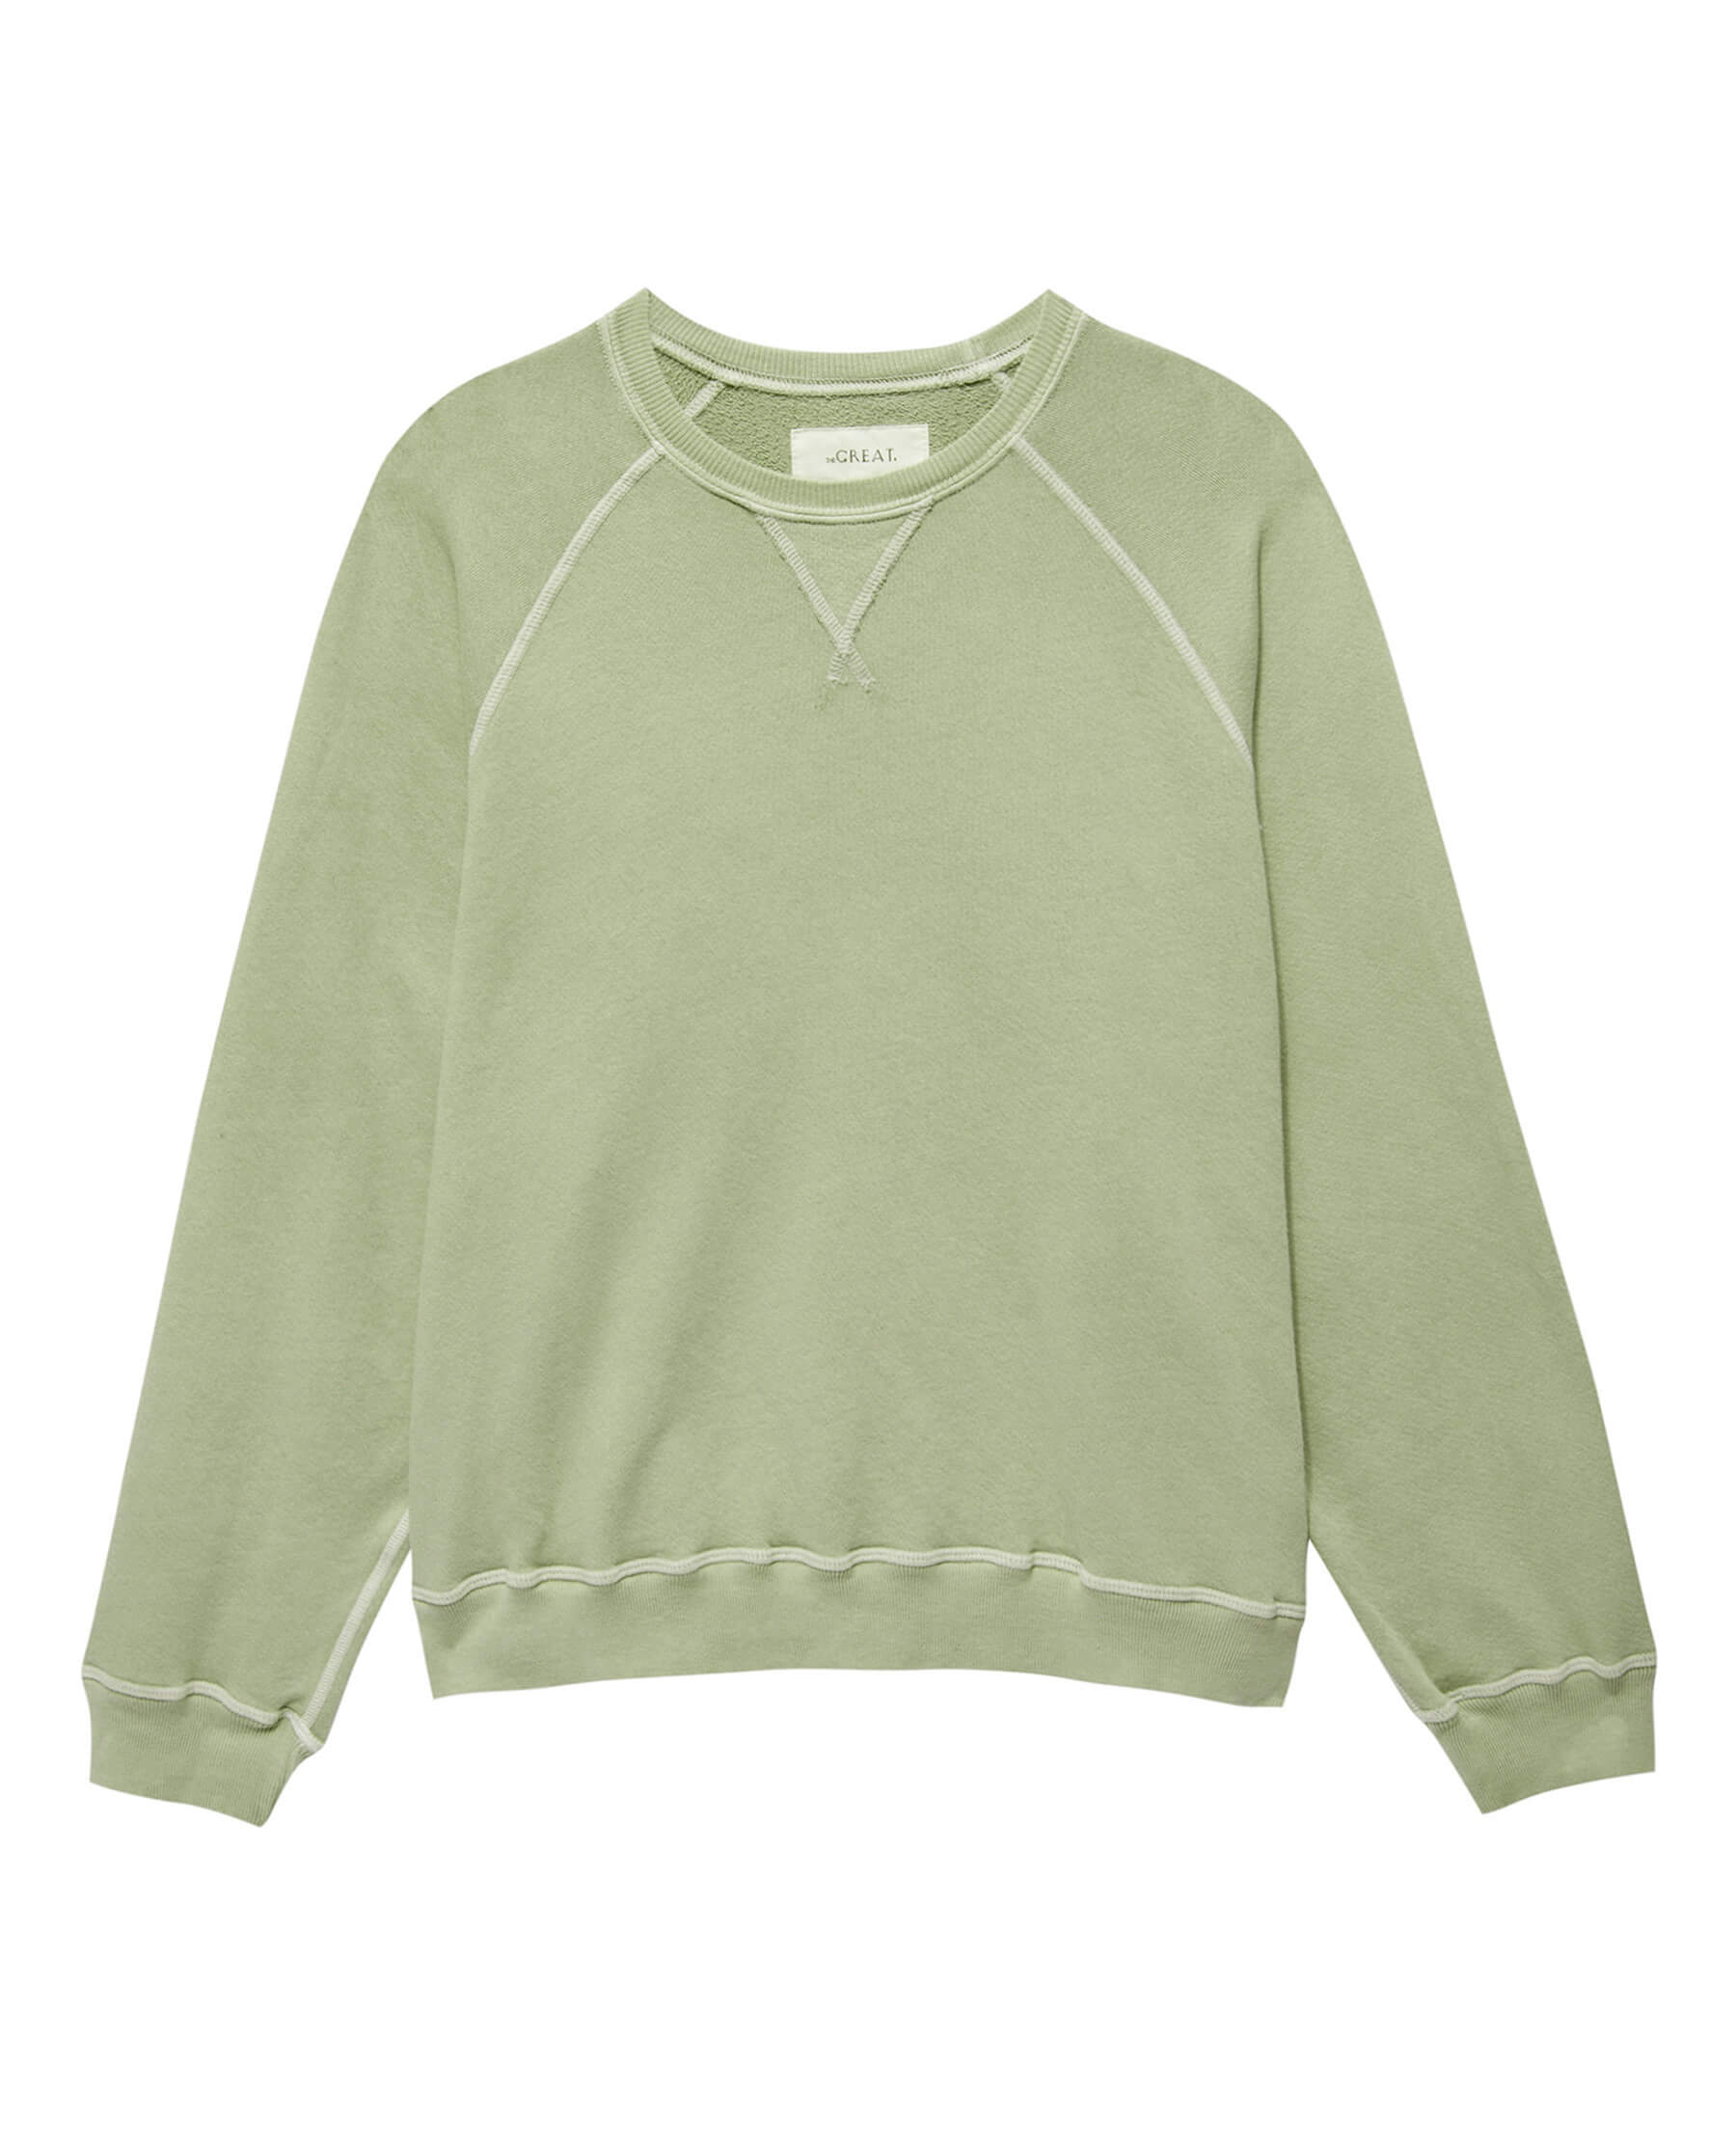 The Slouch Sweatshirt. Solid -- Pistachio